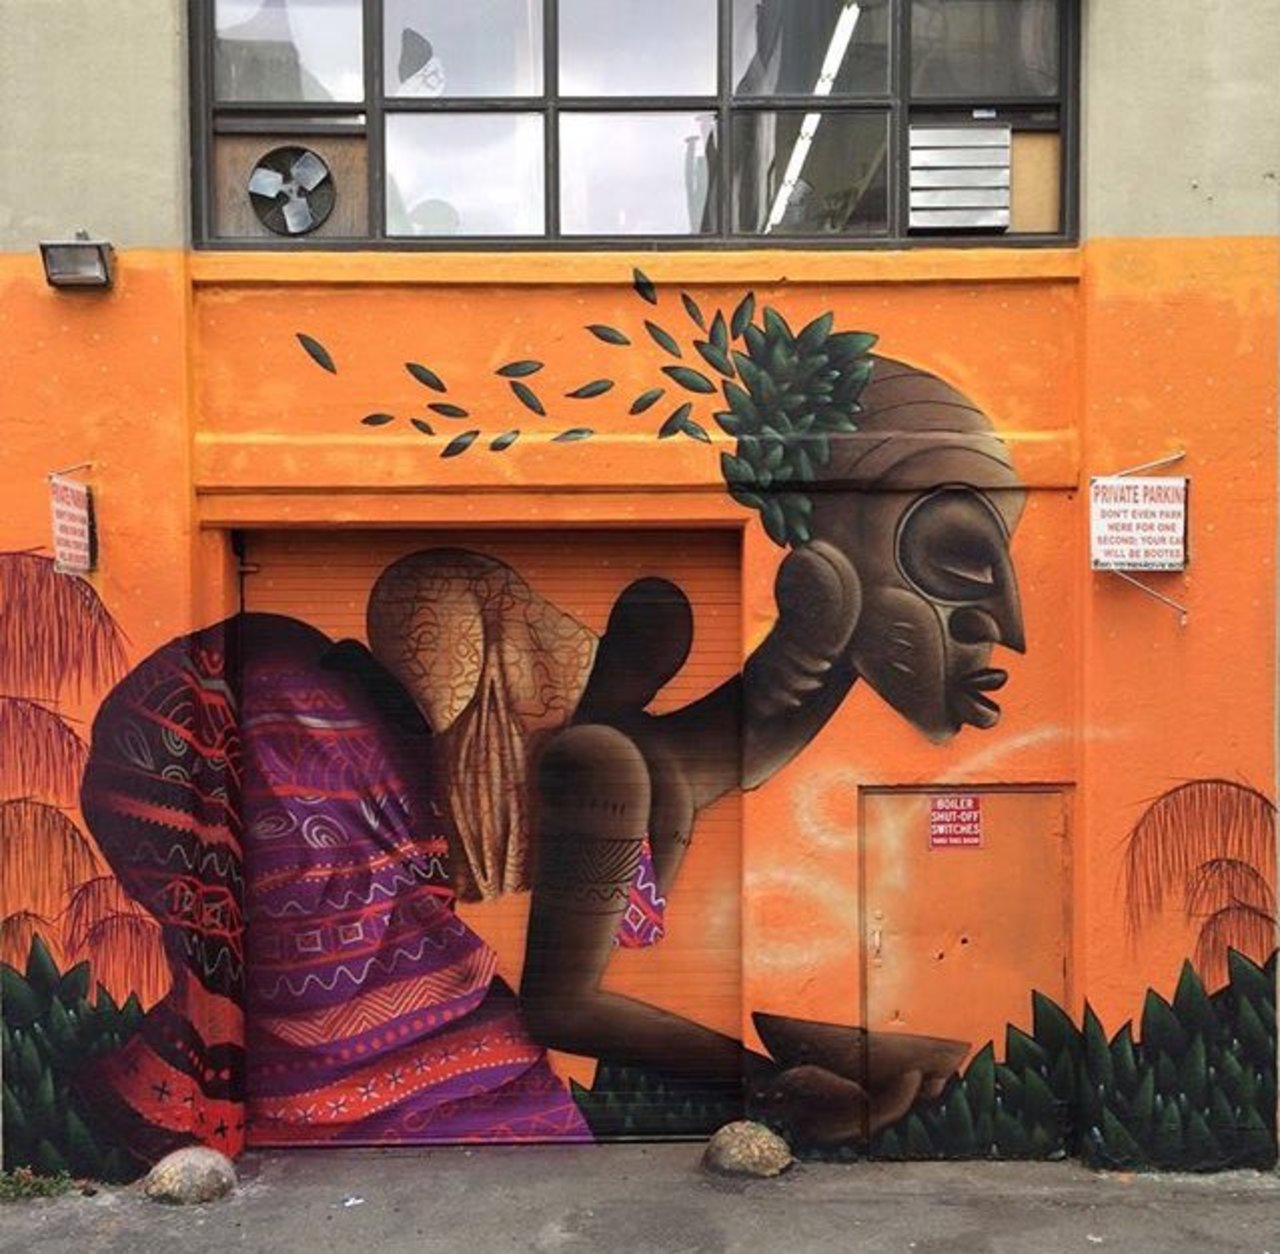 RT @s8nti8go: New Street Art by Alexandre Keto in NYC 

#art #graffiti #mural #streetart https://t.co/aysRgXe1xn